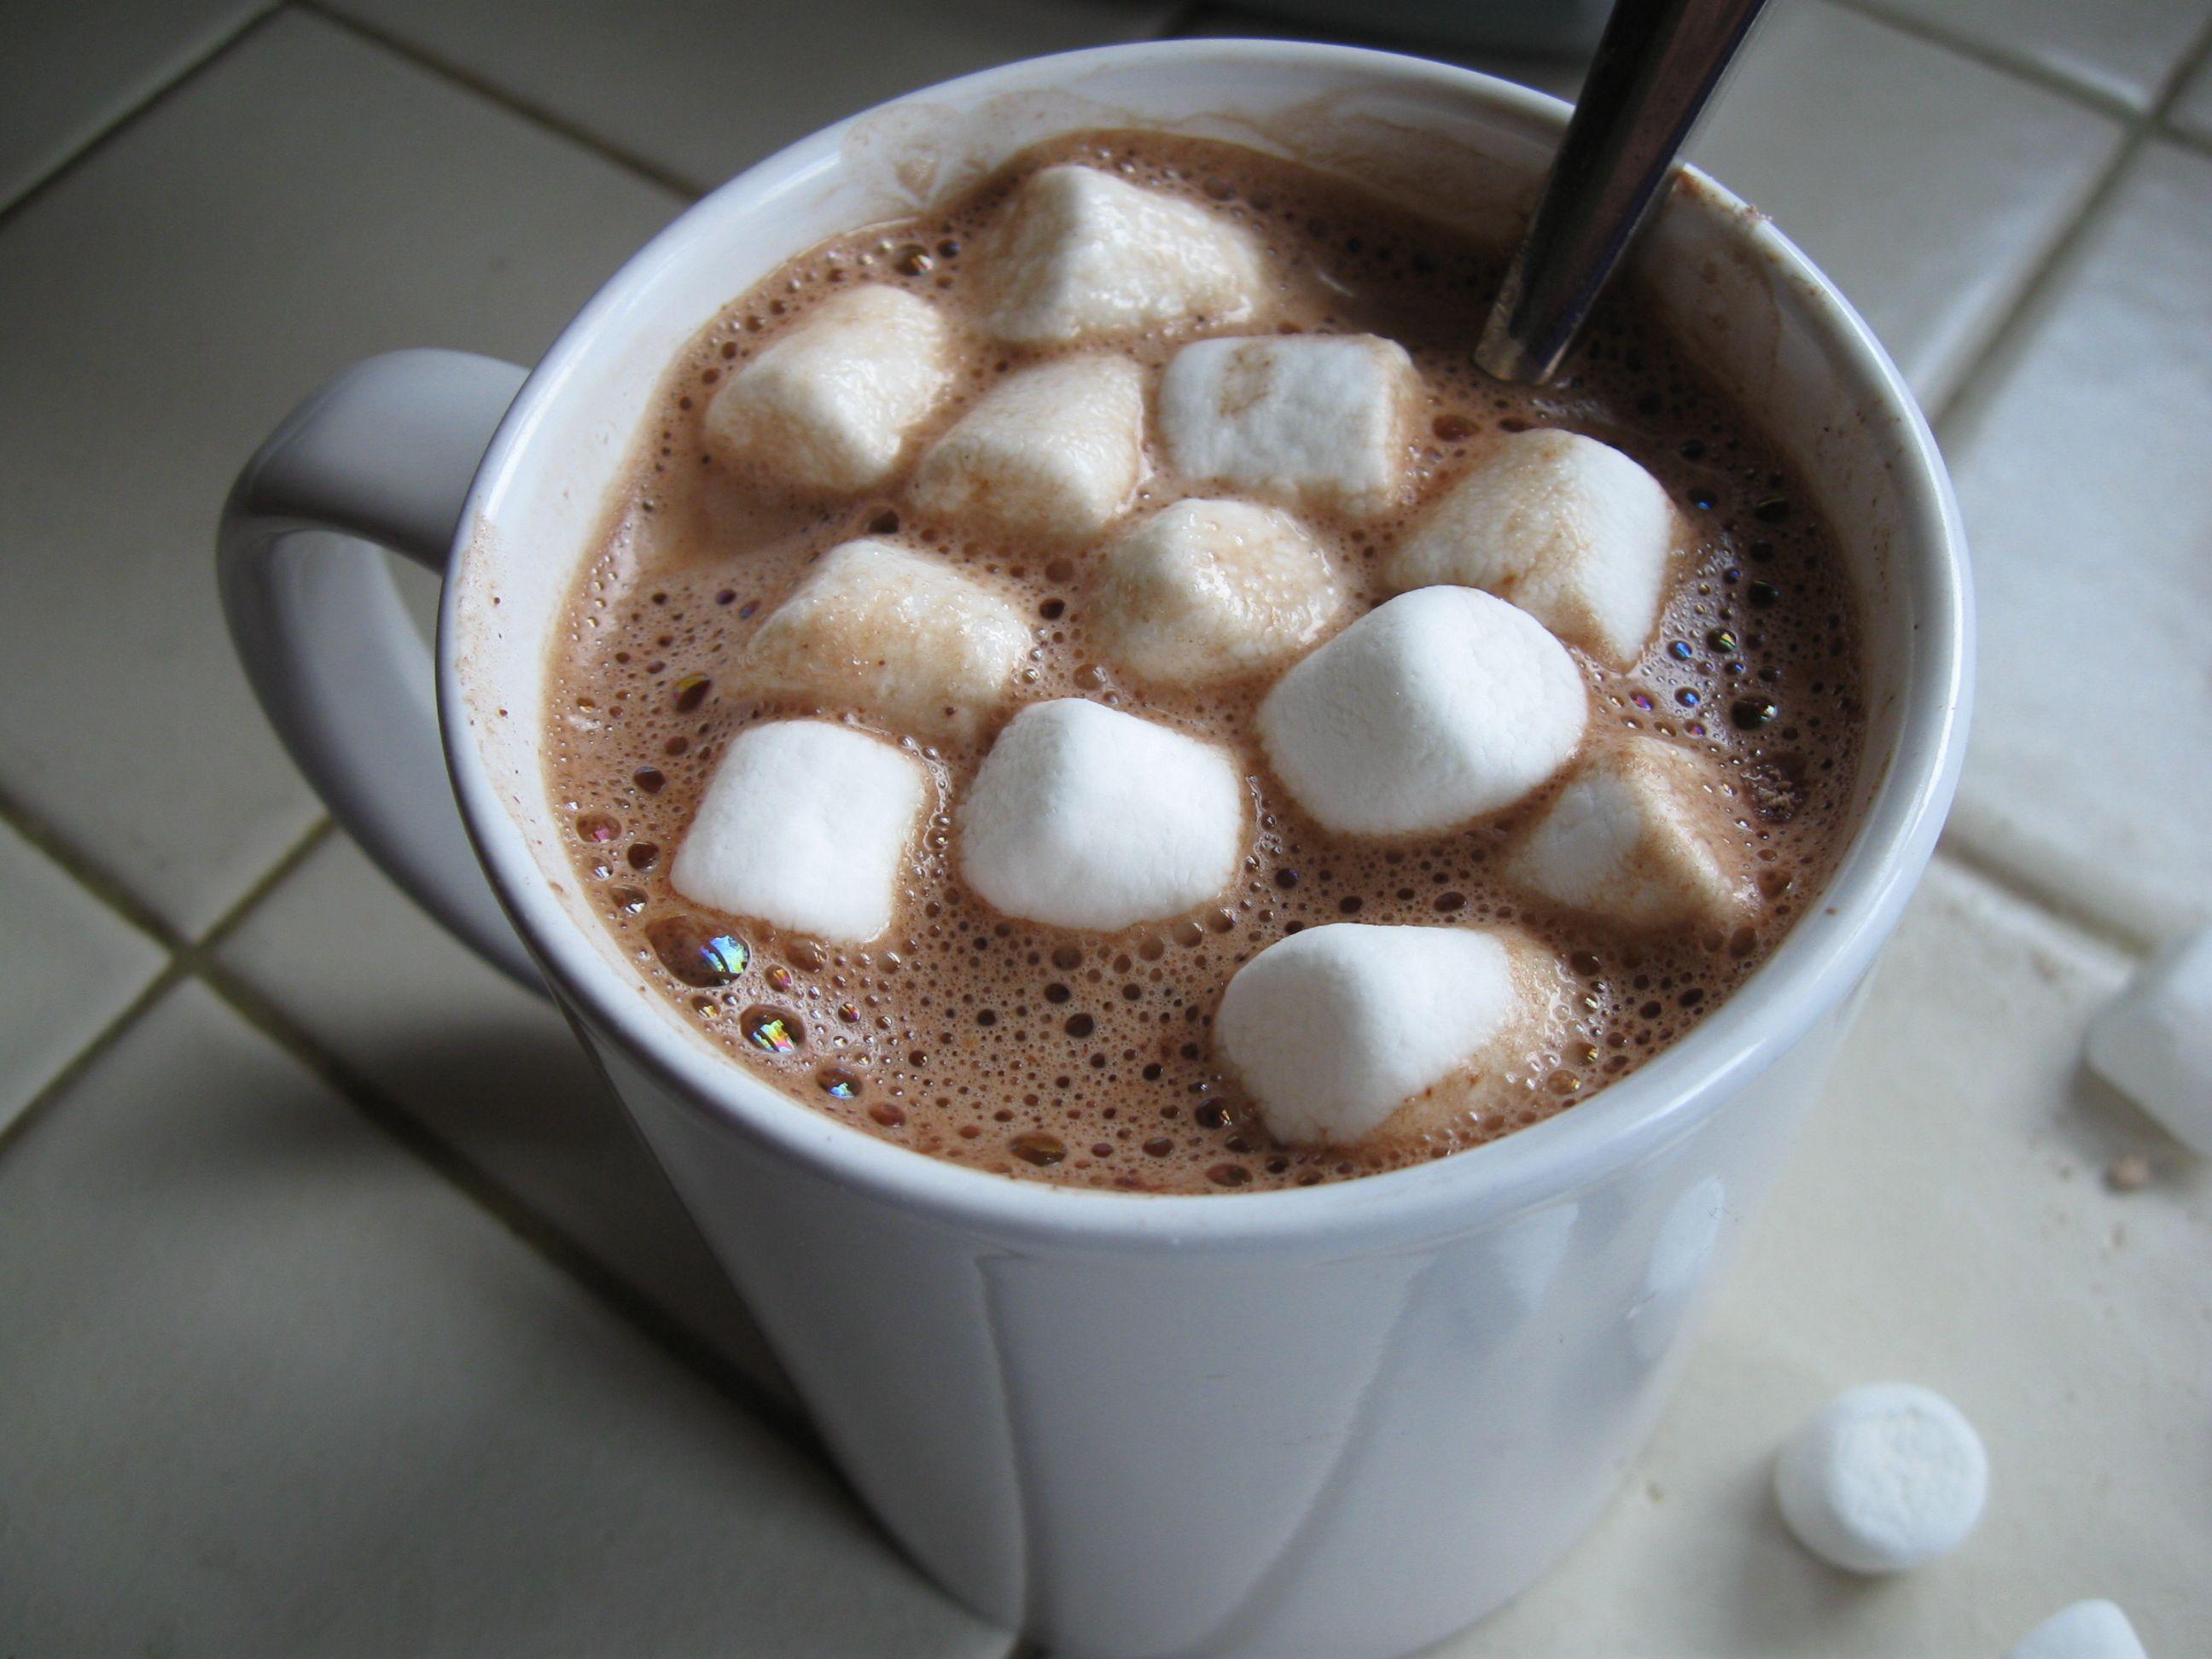 2592x1944px Hot Chocolate (1655.99 KB).07.2015